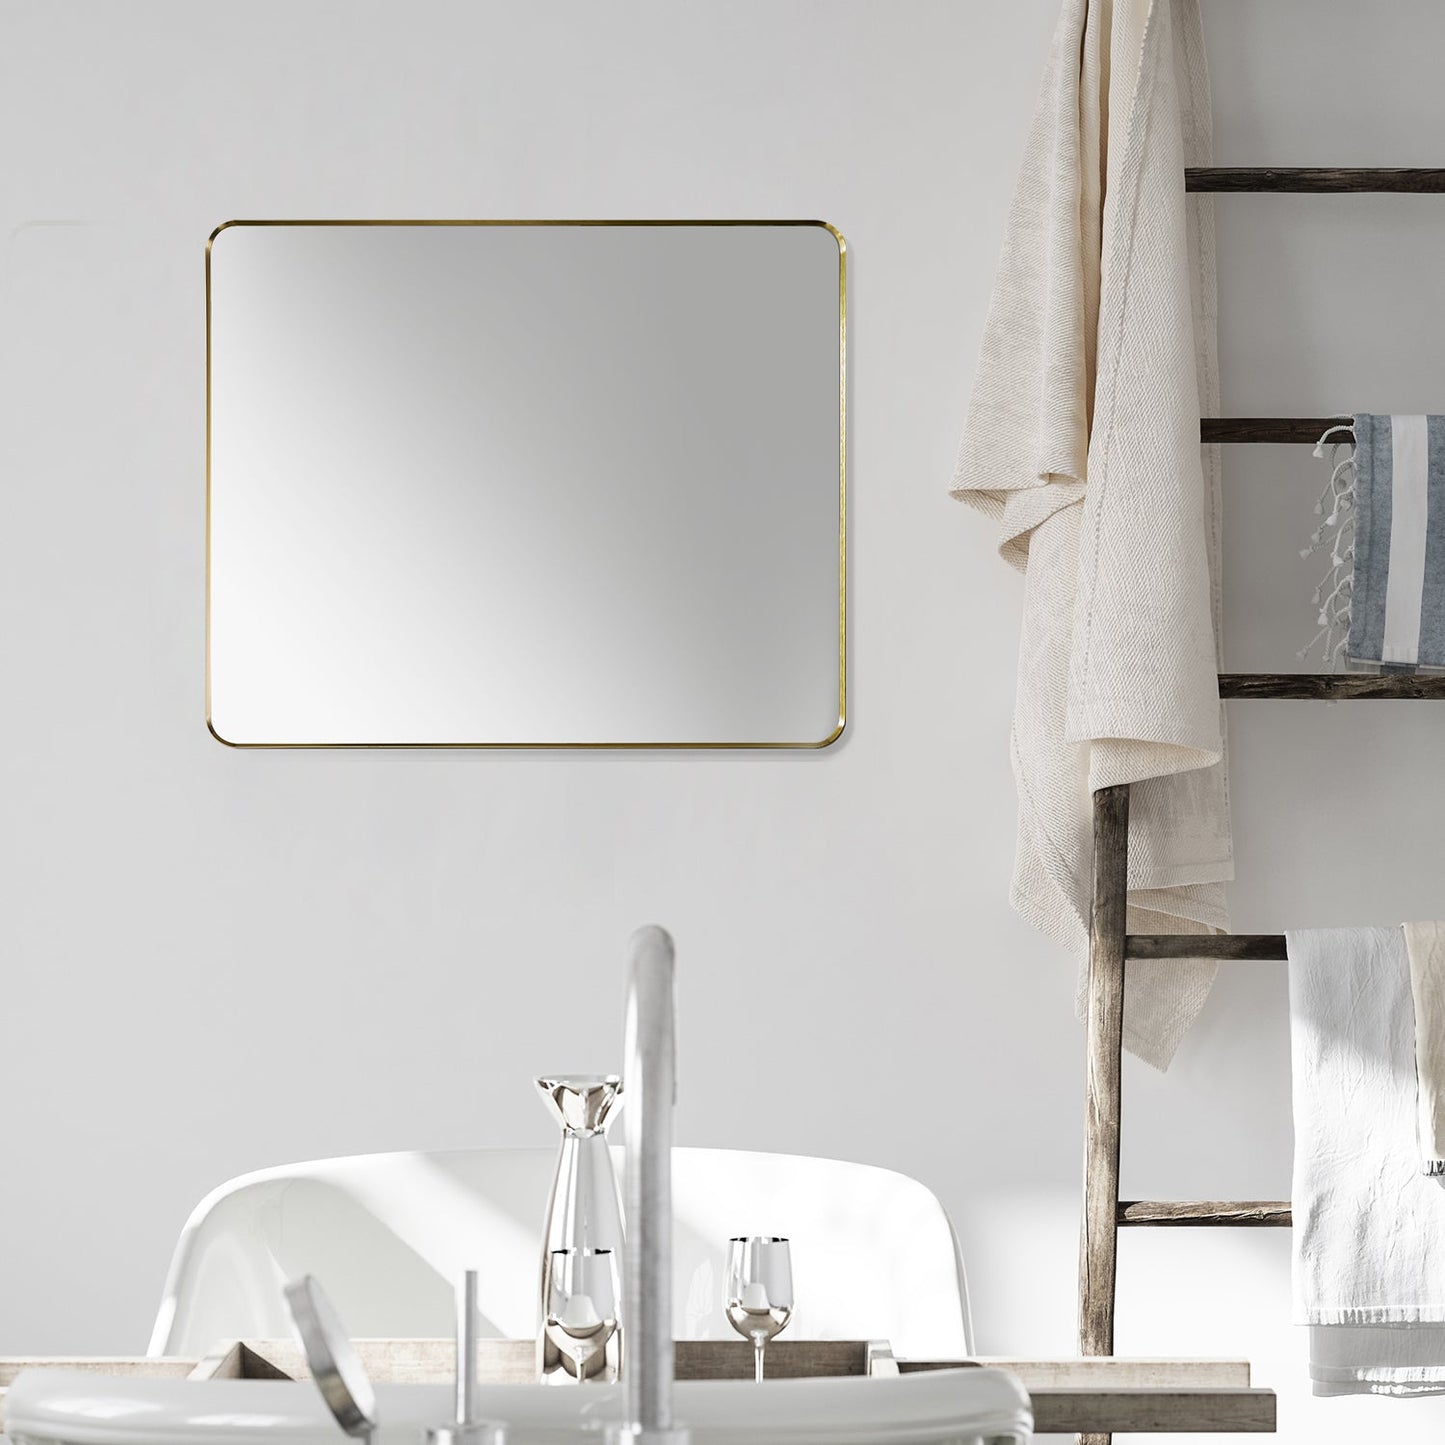 Nettuno 36" Rectangle Bathroom/Vanity Brushed Gold Aluminum Framed Wall Mirror